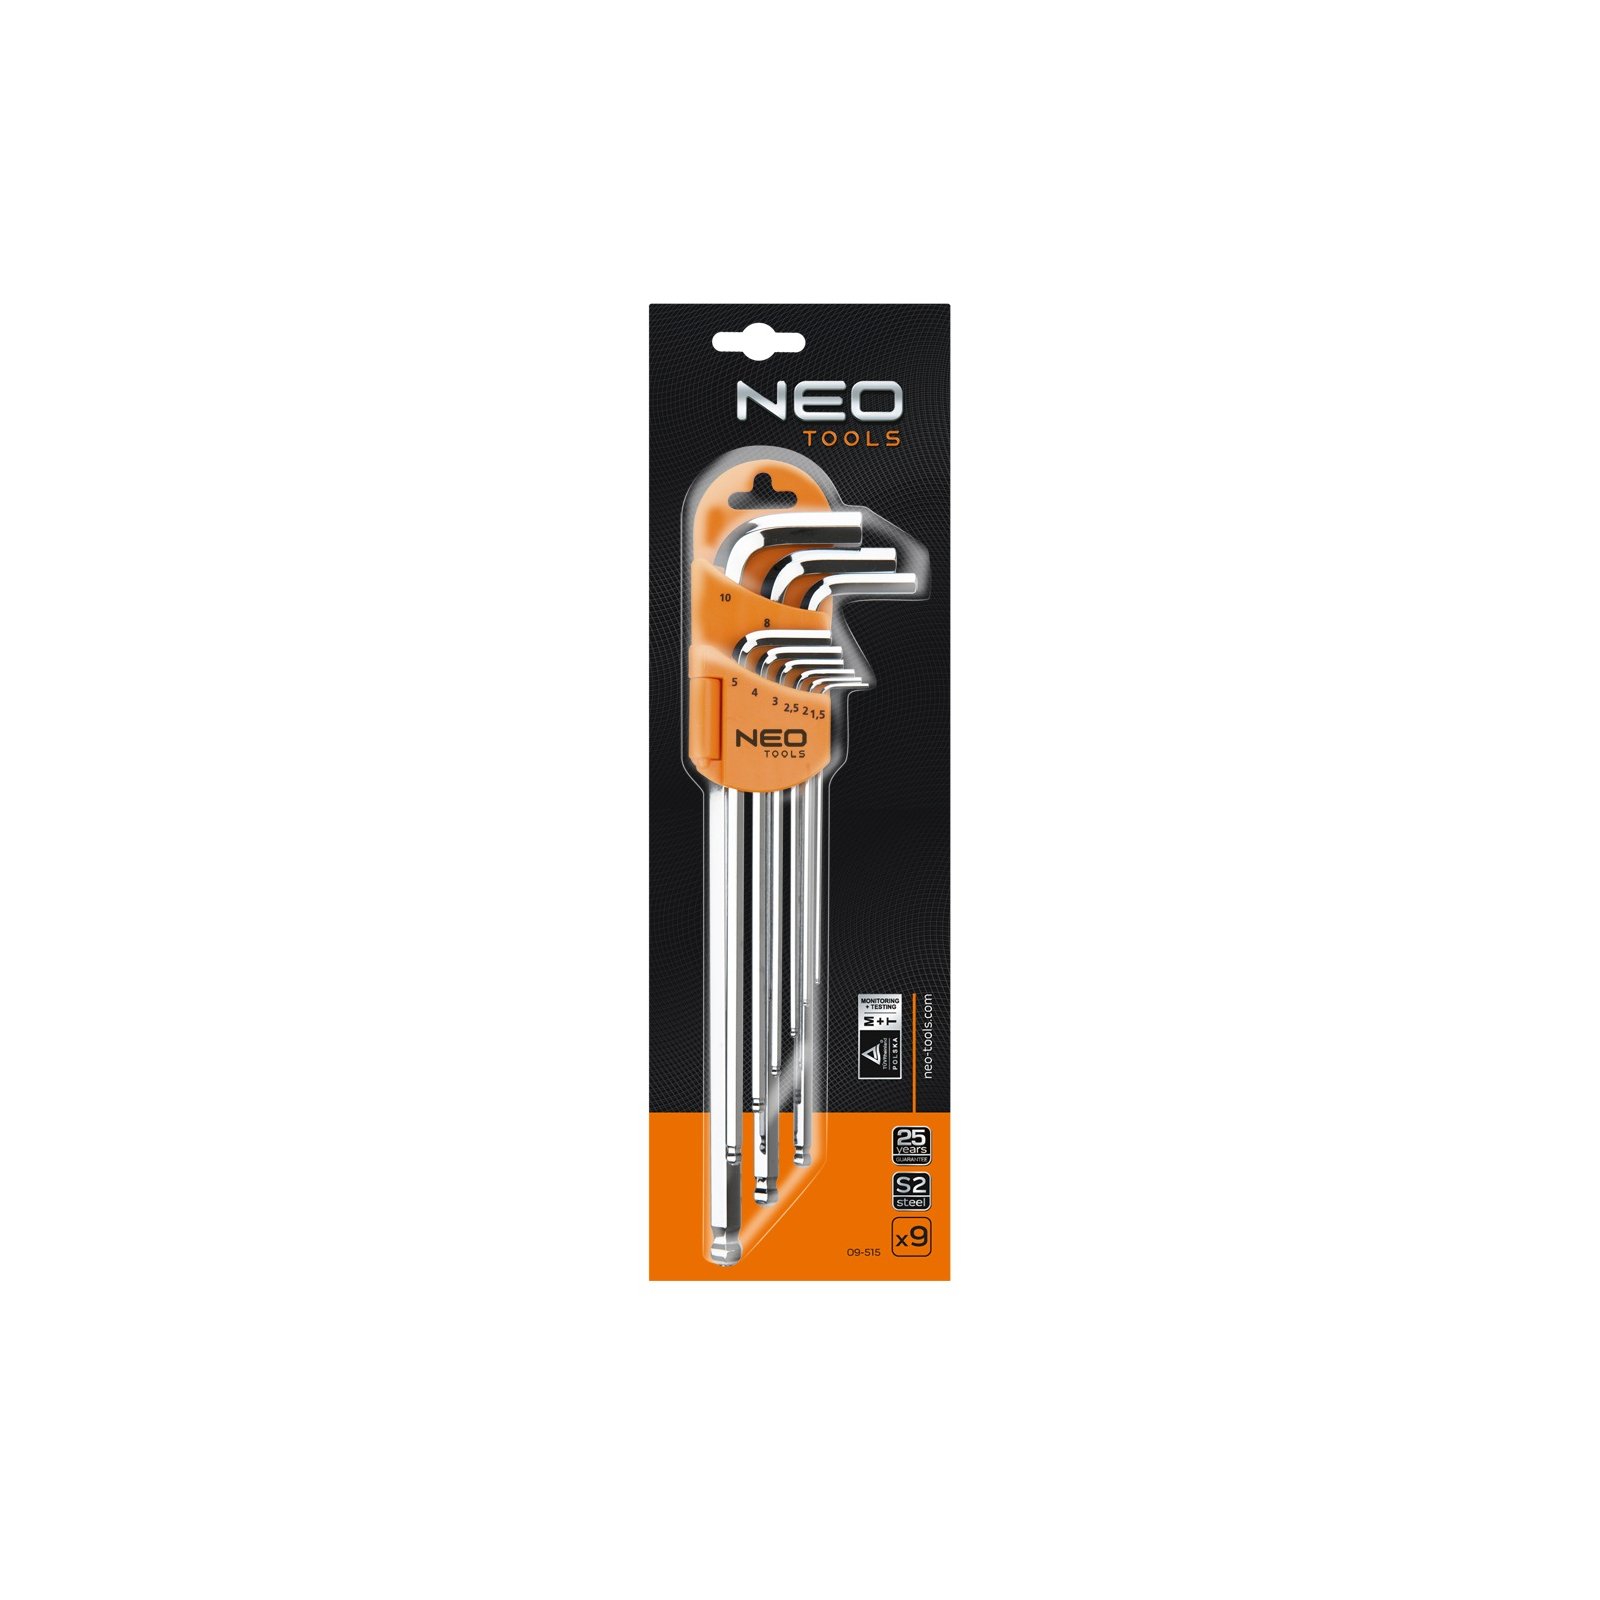 Ключ Neo Tools ключей шестигранных,, 1.5-10 мм, 9 шт. (09-515) изображение 2